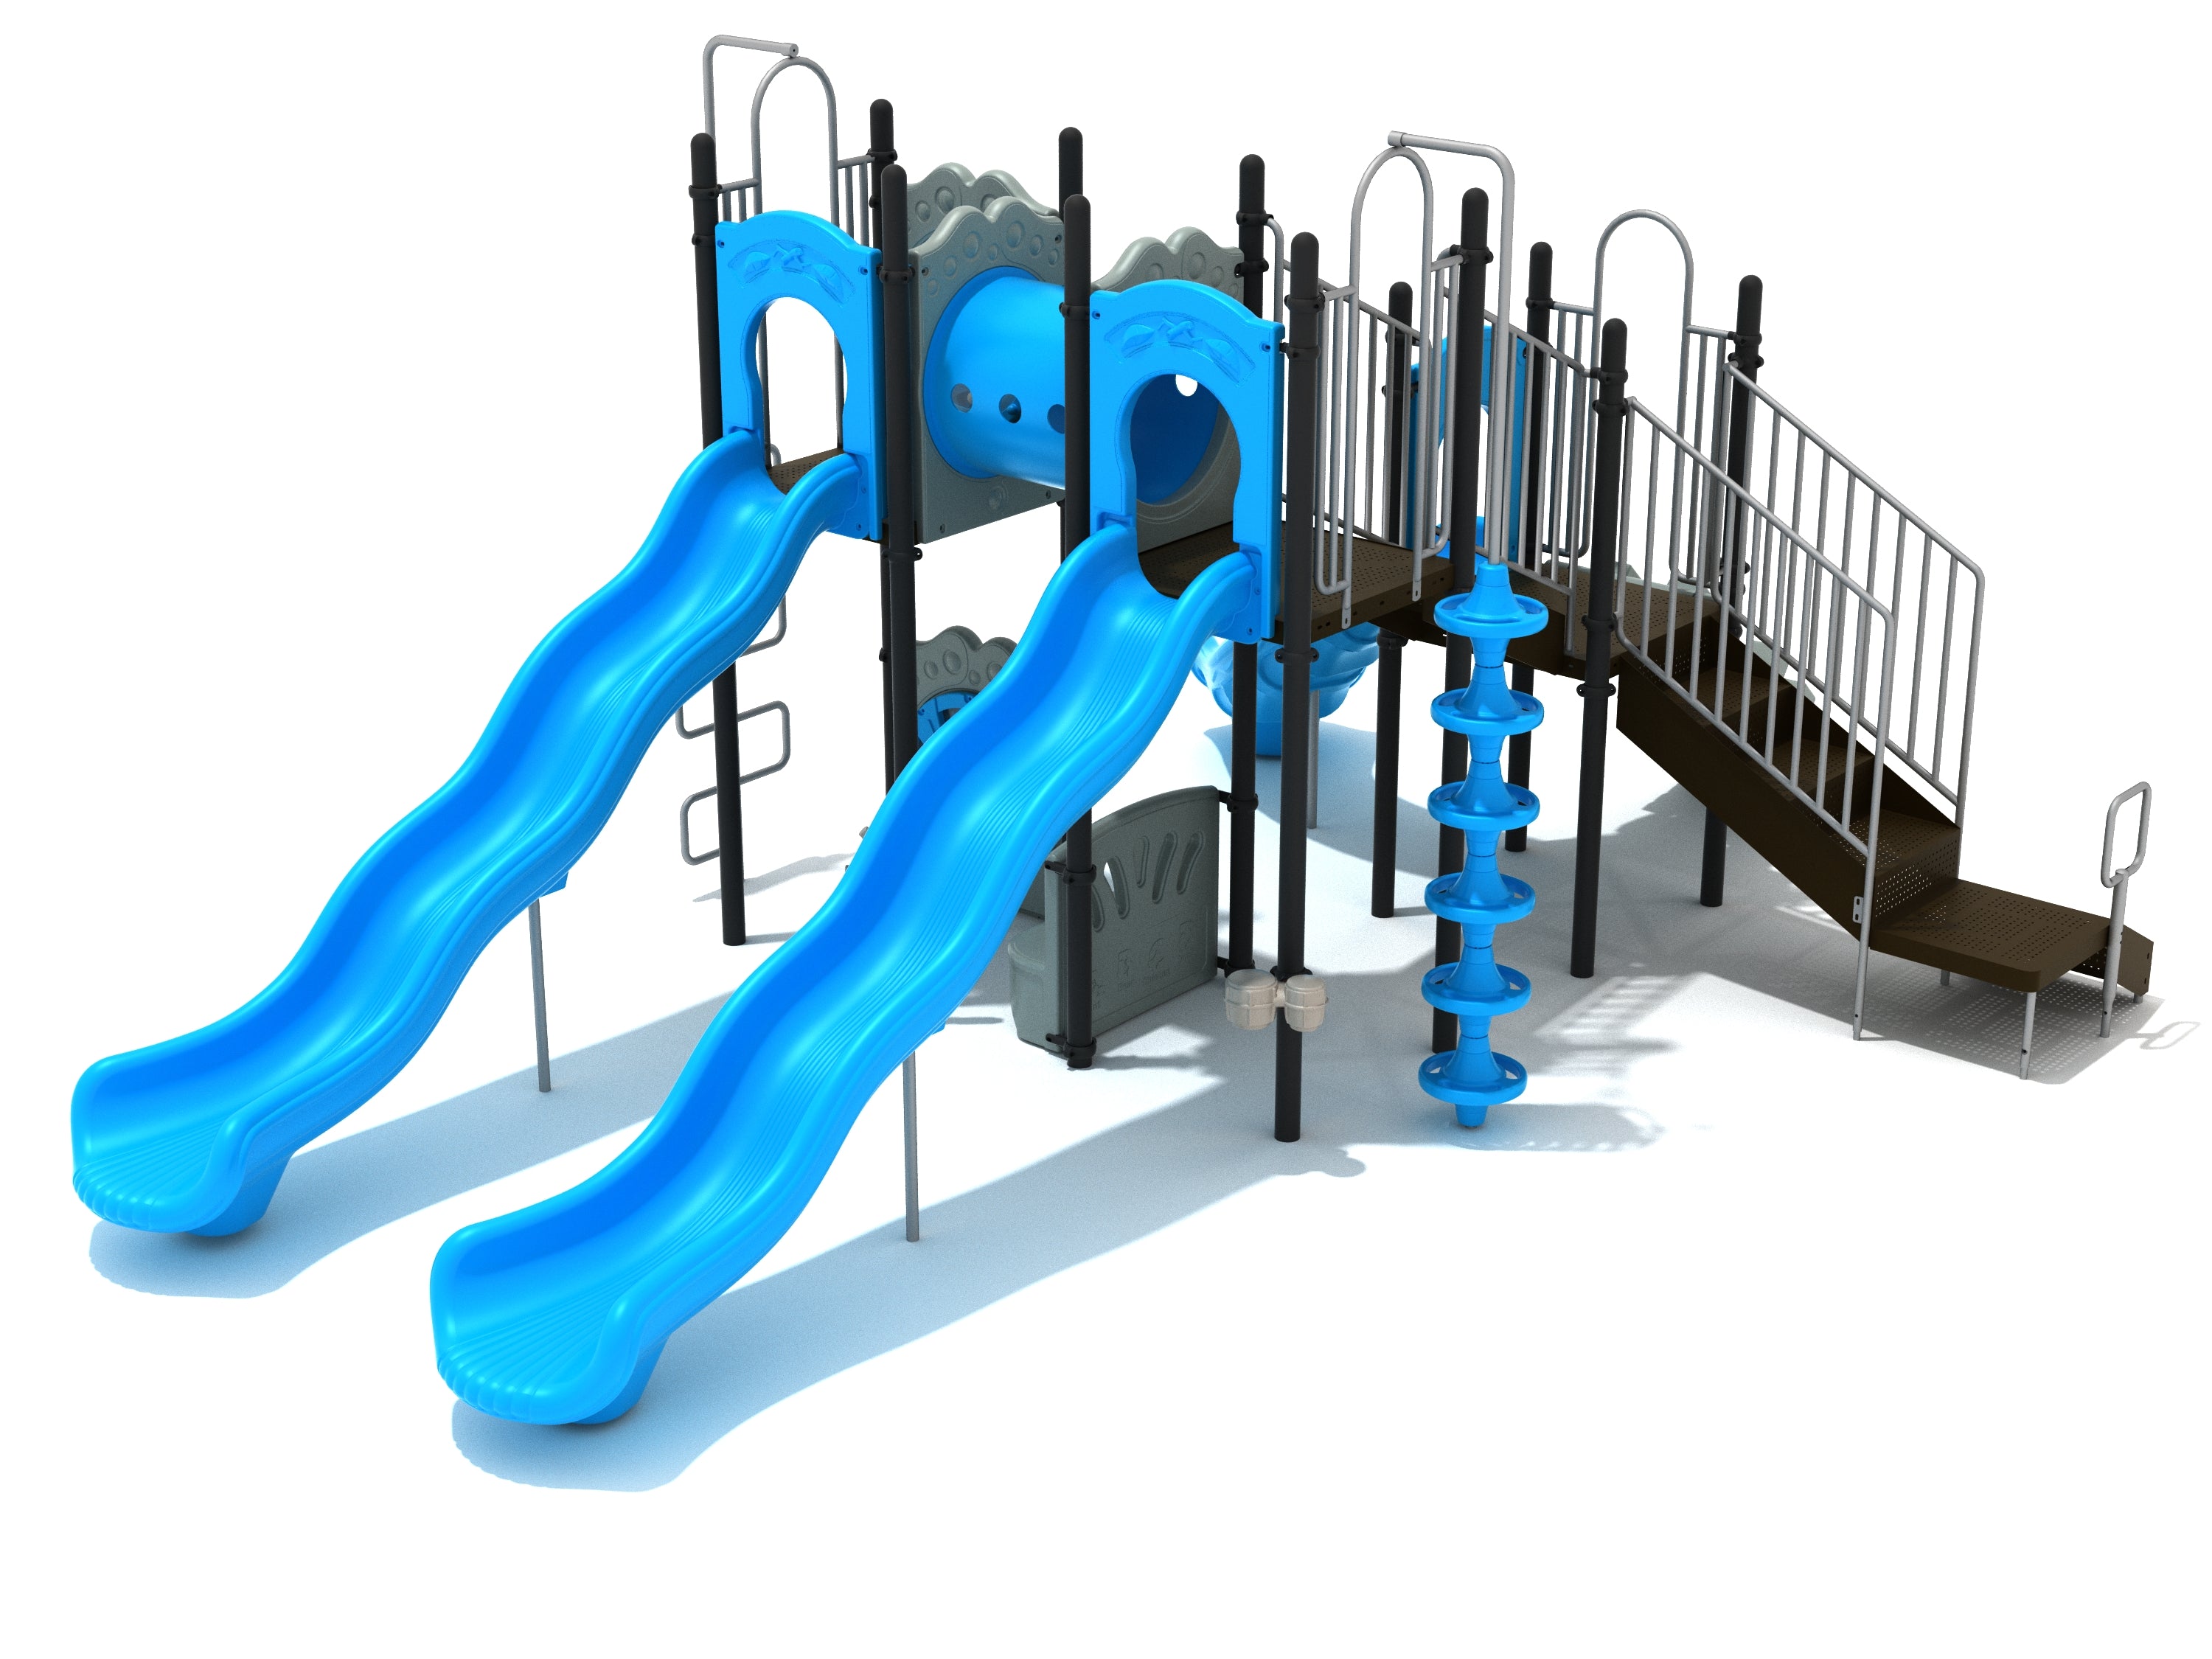 Playplus - Creating Playgrounds of Knowledge